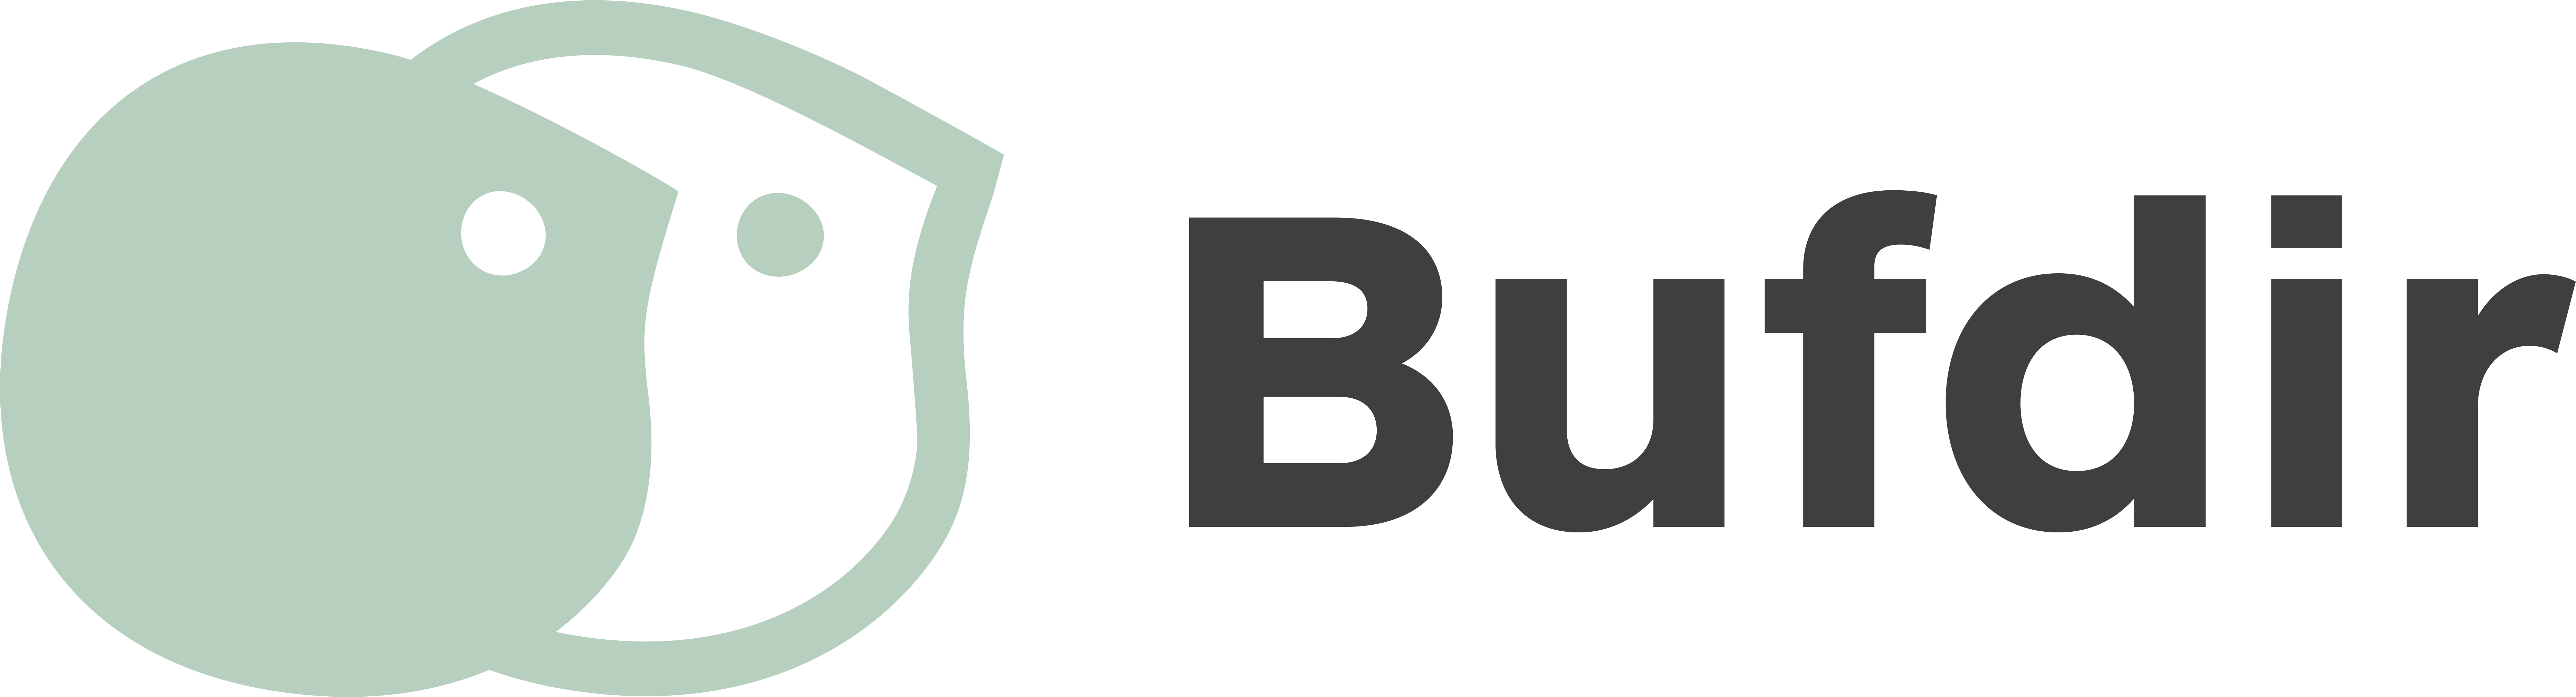 bufdir_logo_horisontal_rgb.png (7419×2007)